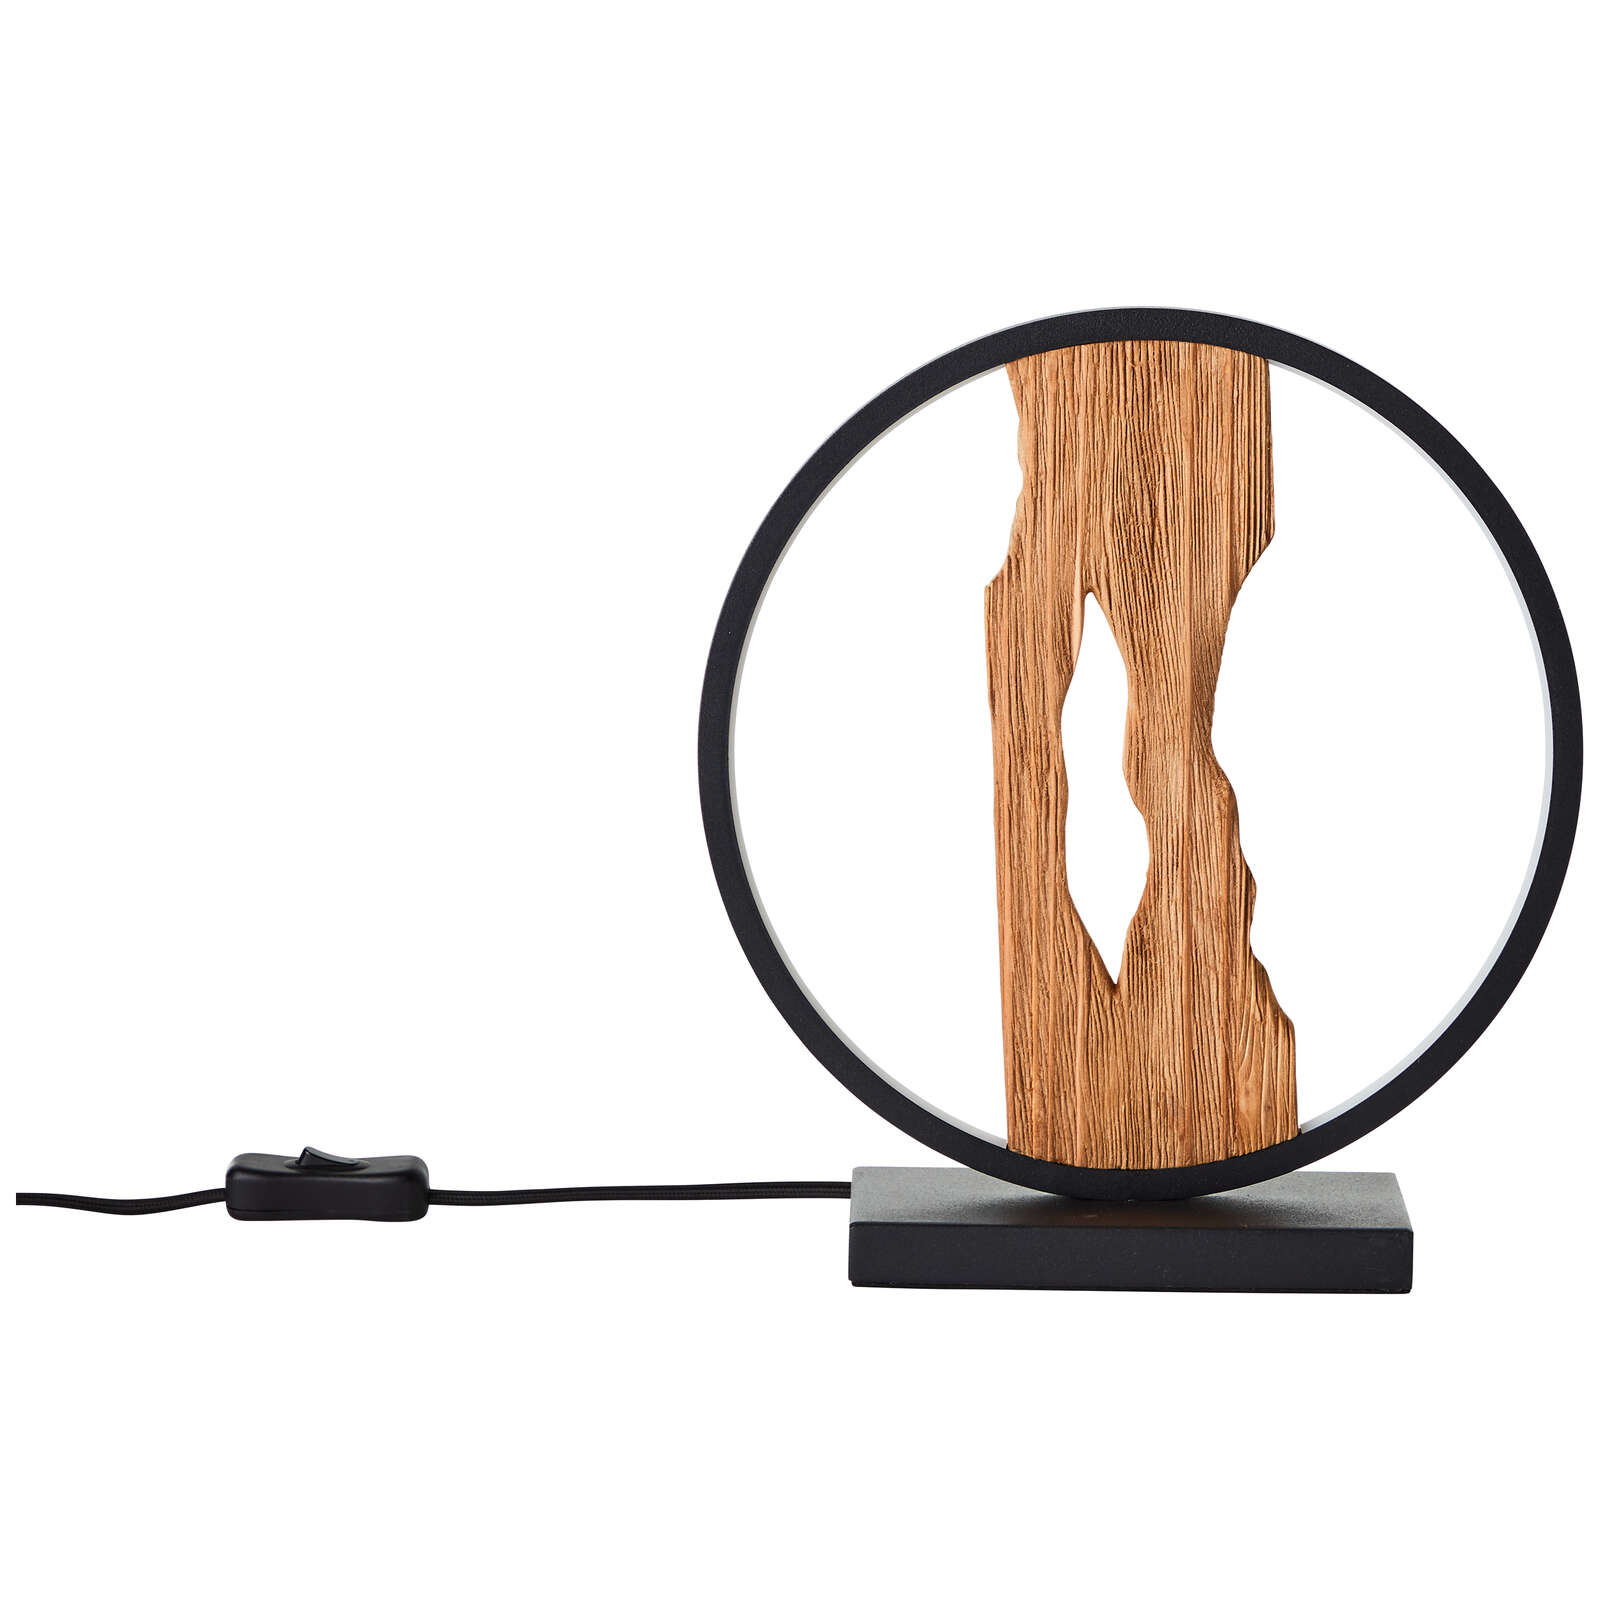             Wooden table lamp - Elea 1 - Brown
        